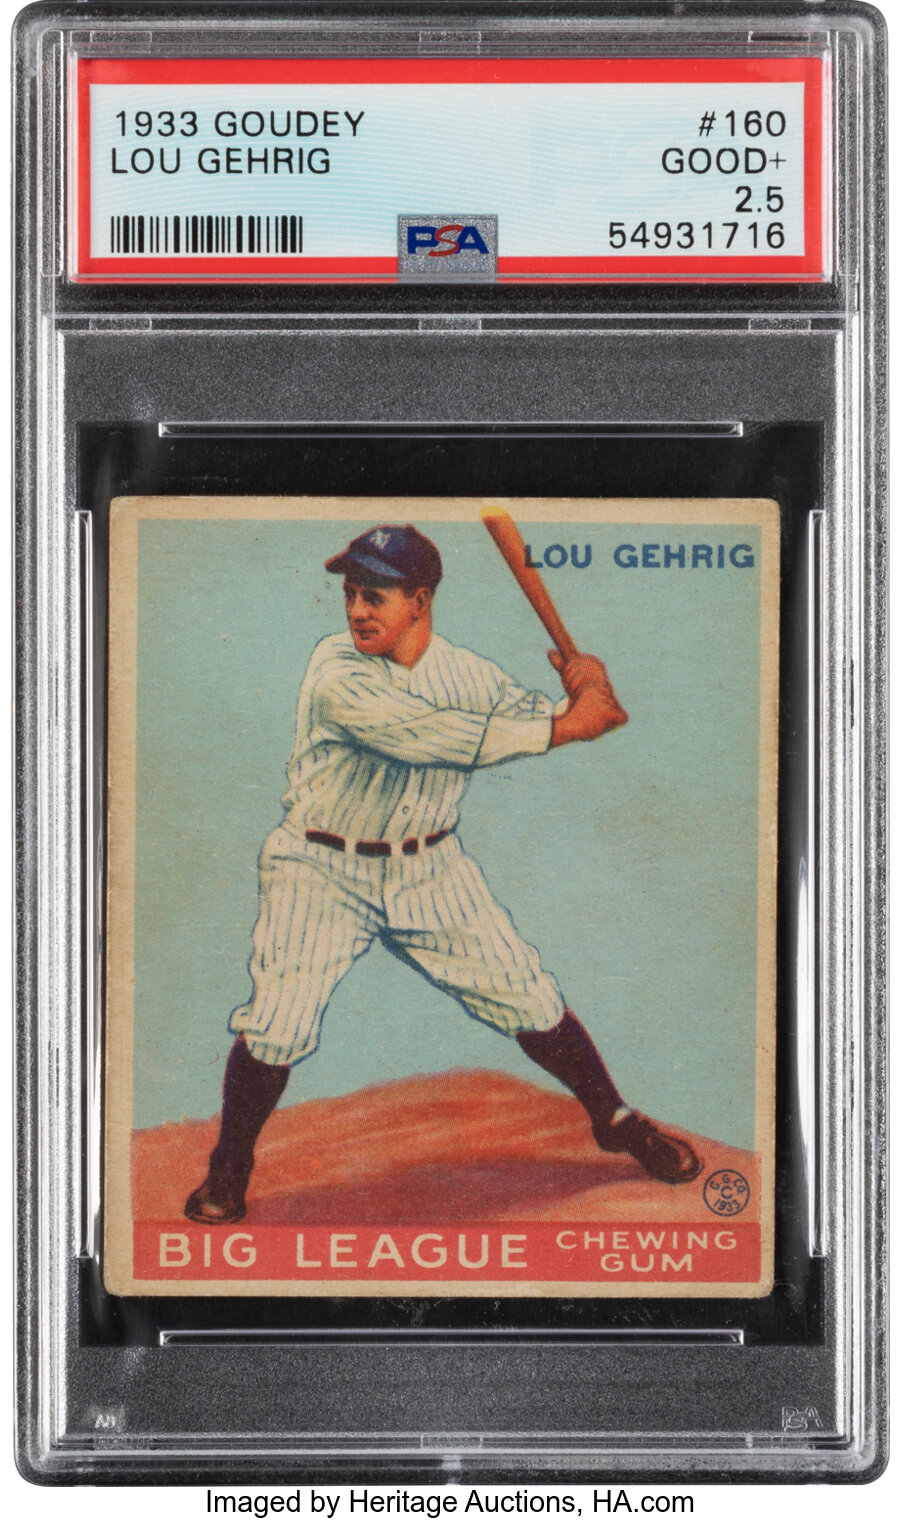 1933 Goudey Lou Gehrig #160 PSA Good+ 2.5